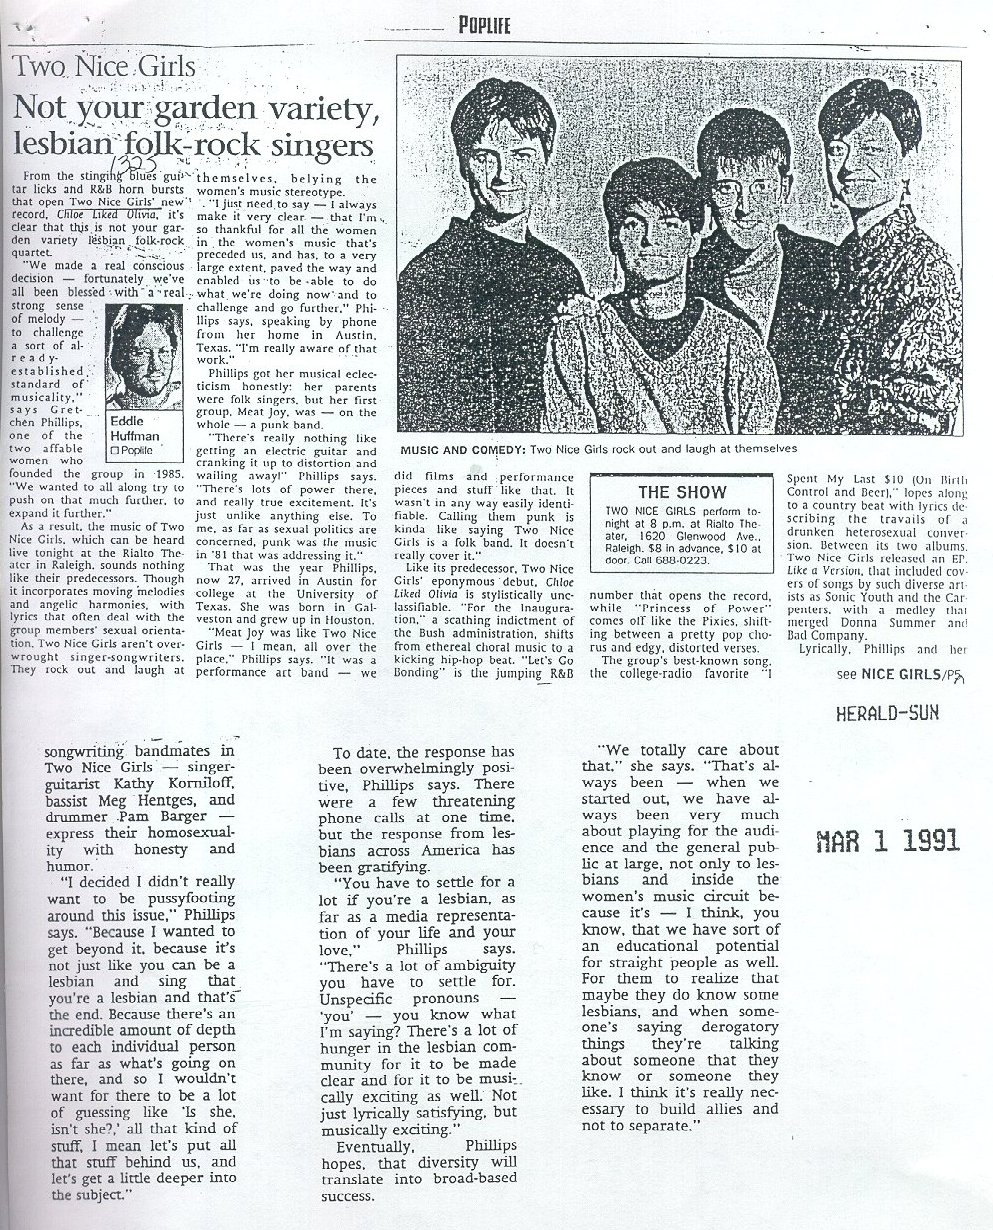 Herald Sun, March 1991